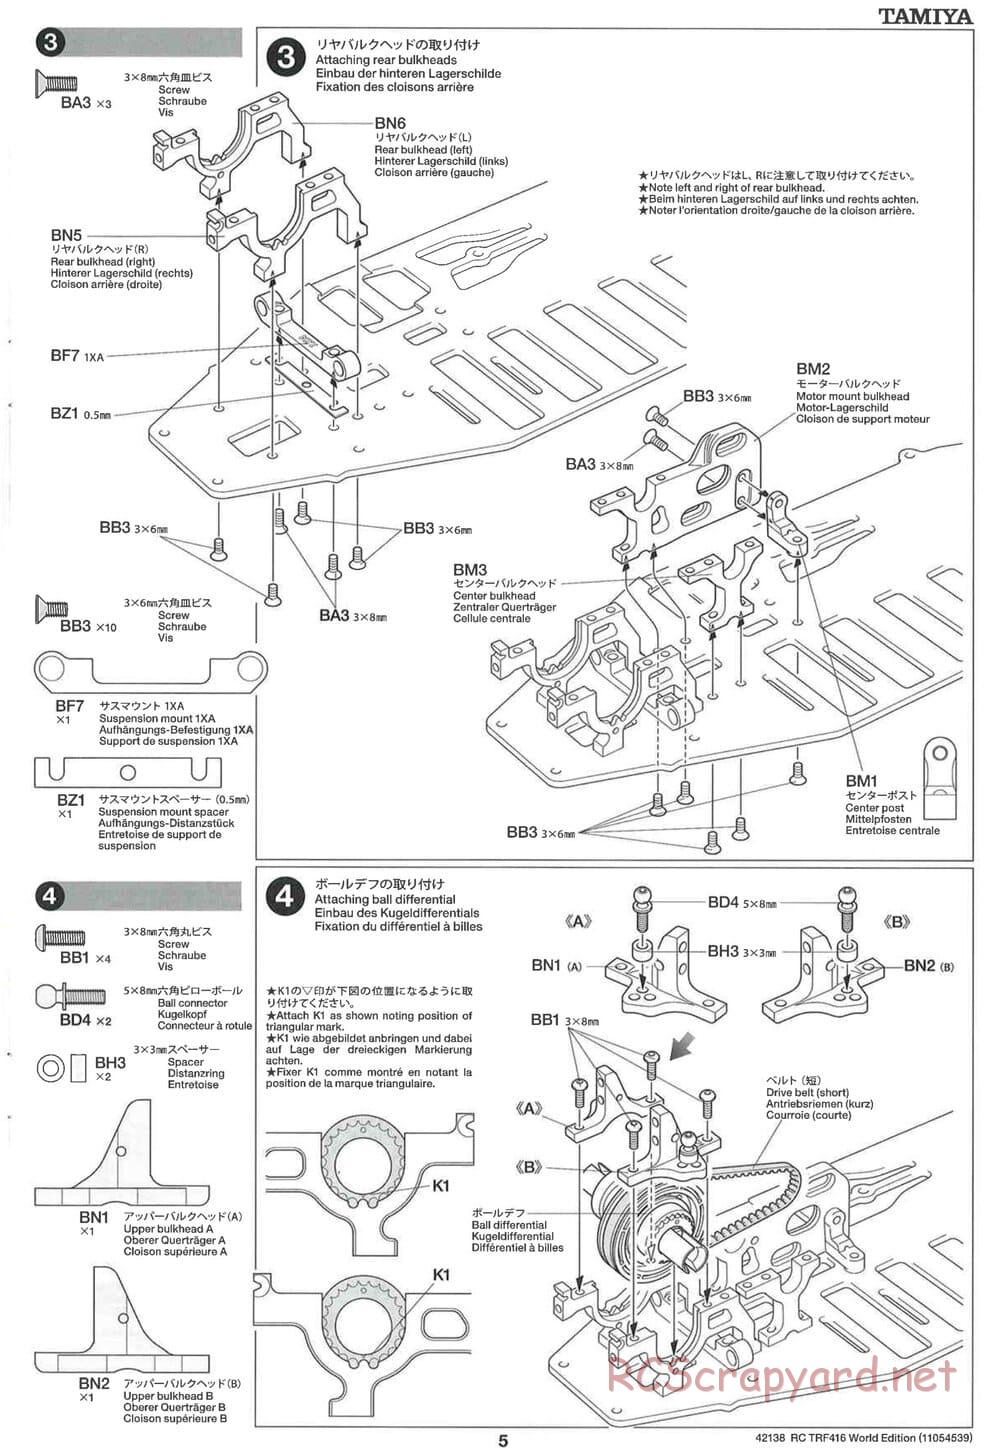 Tamiya - TRF416 World Edition Chassis - Manual - Page 5